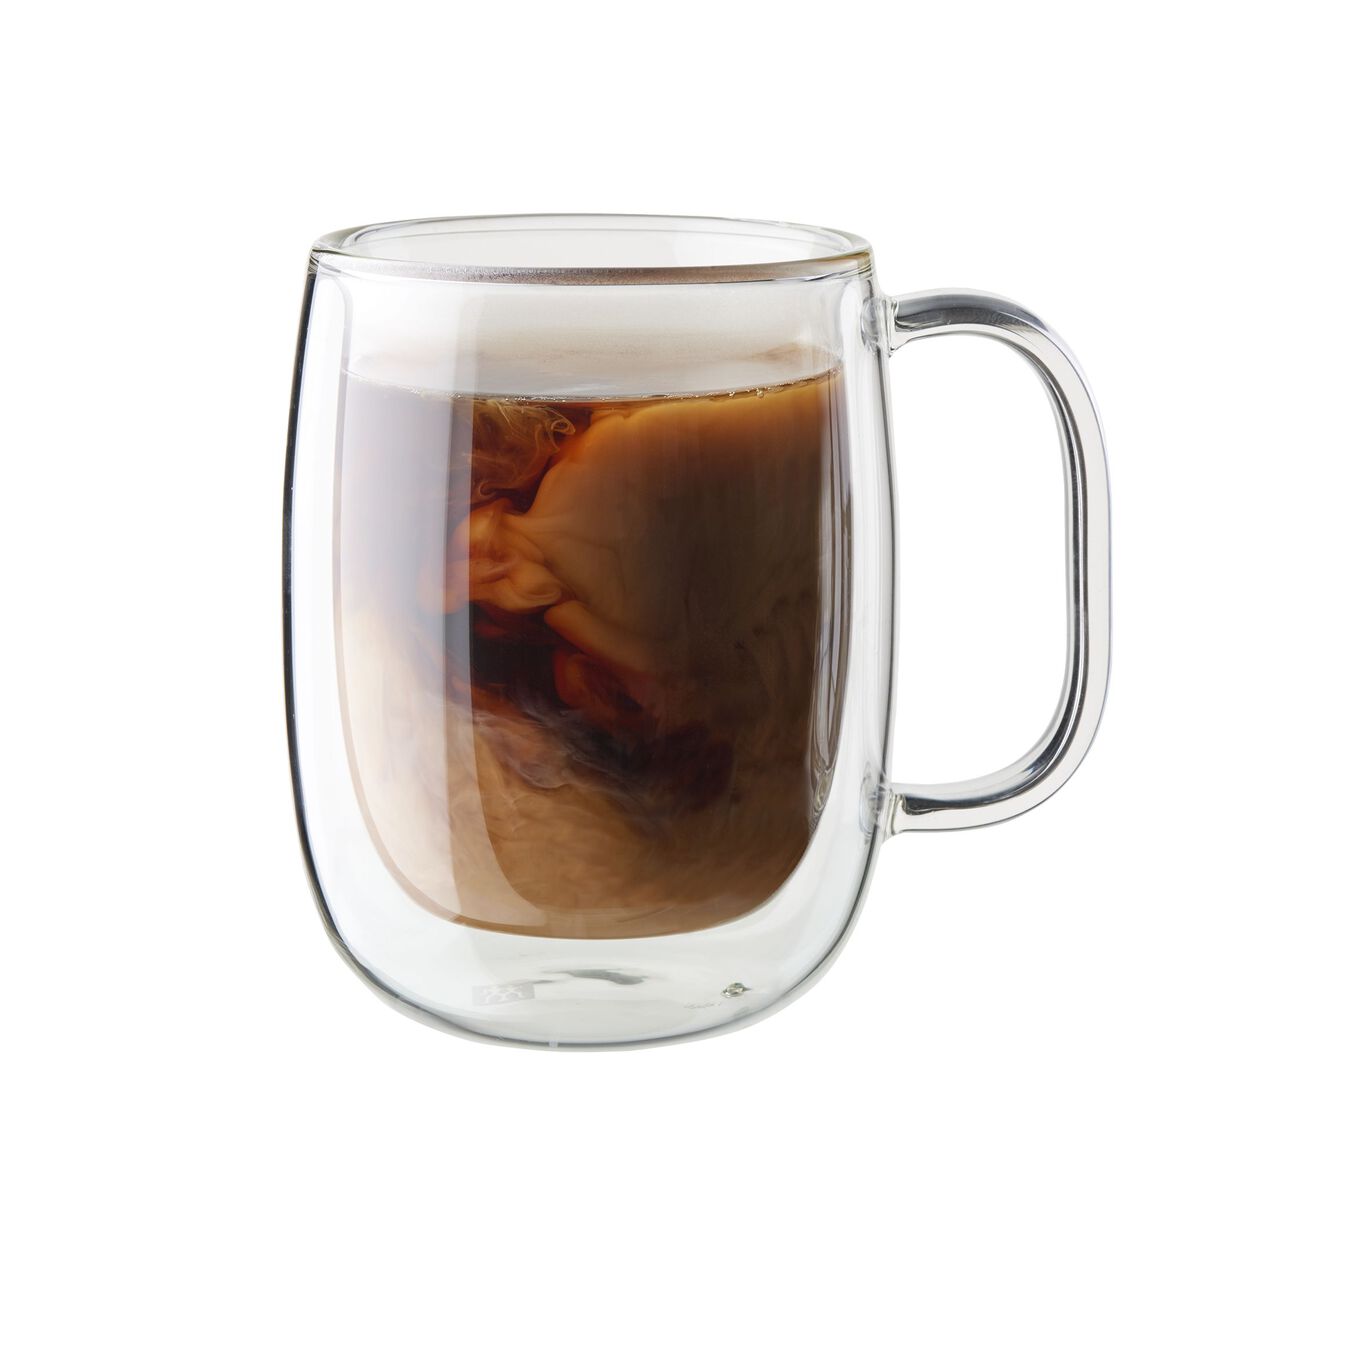 == JA Henckels Set of 2 Double Wall Coffee Glass Mugs Sorrento Plus 12 0z